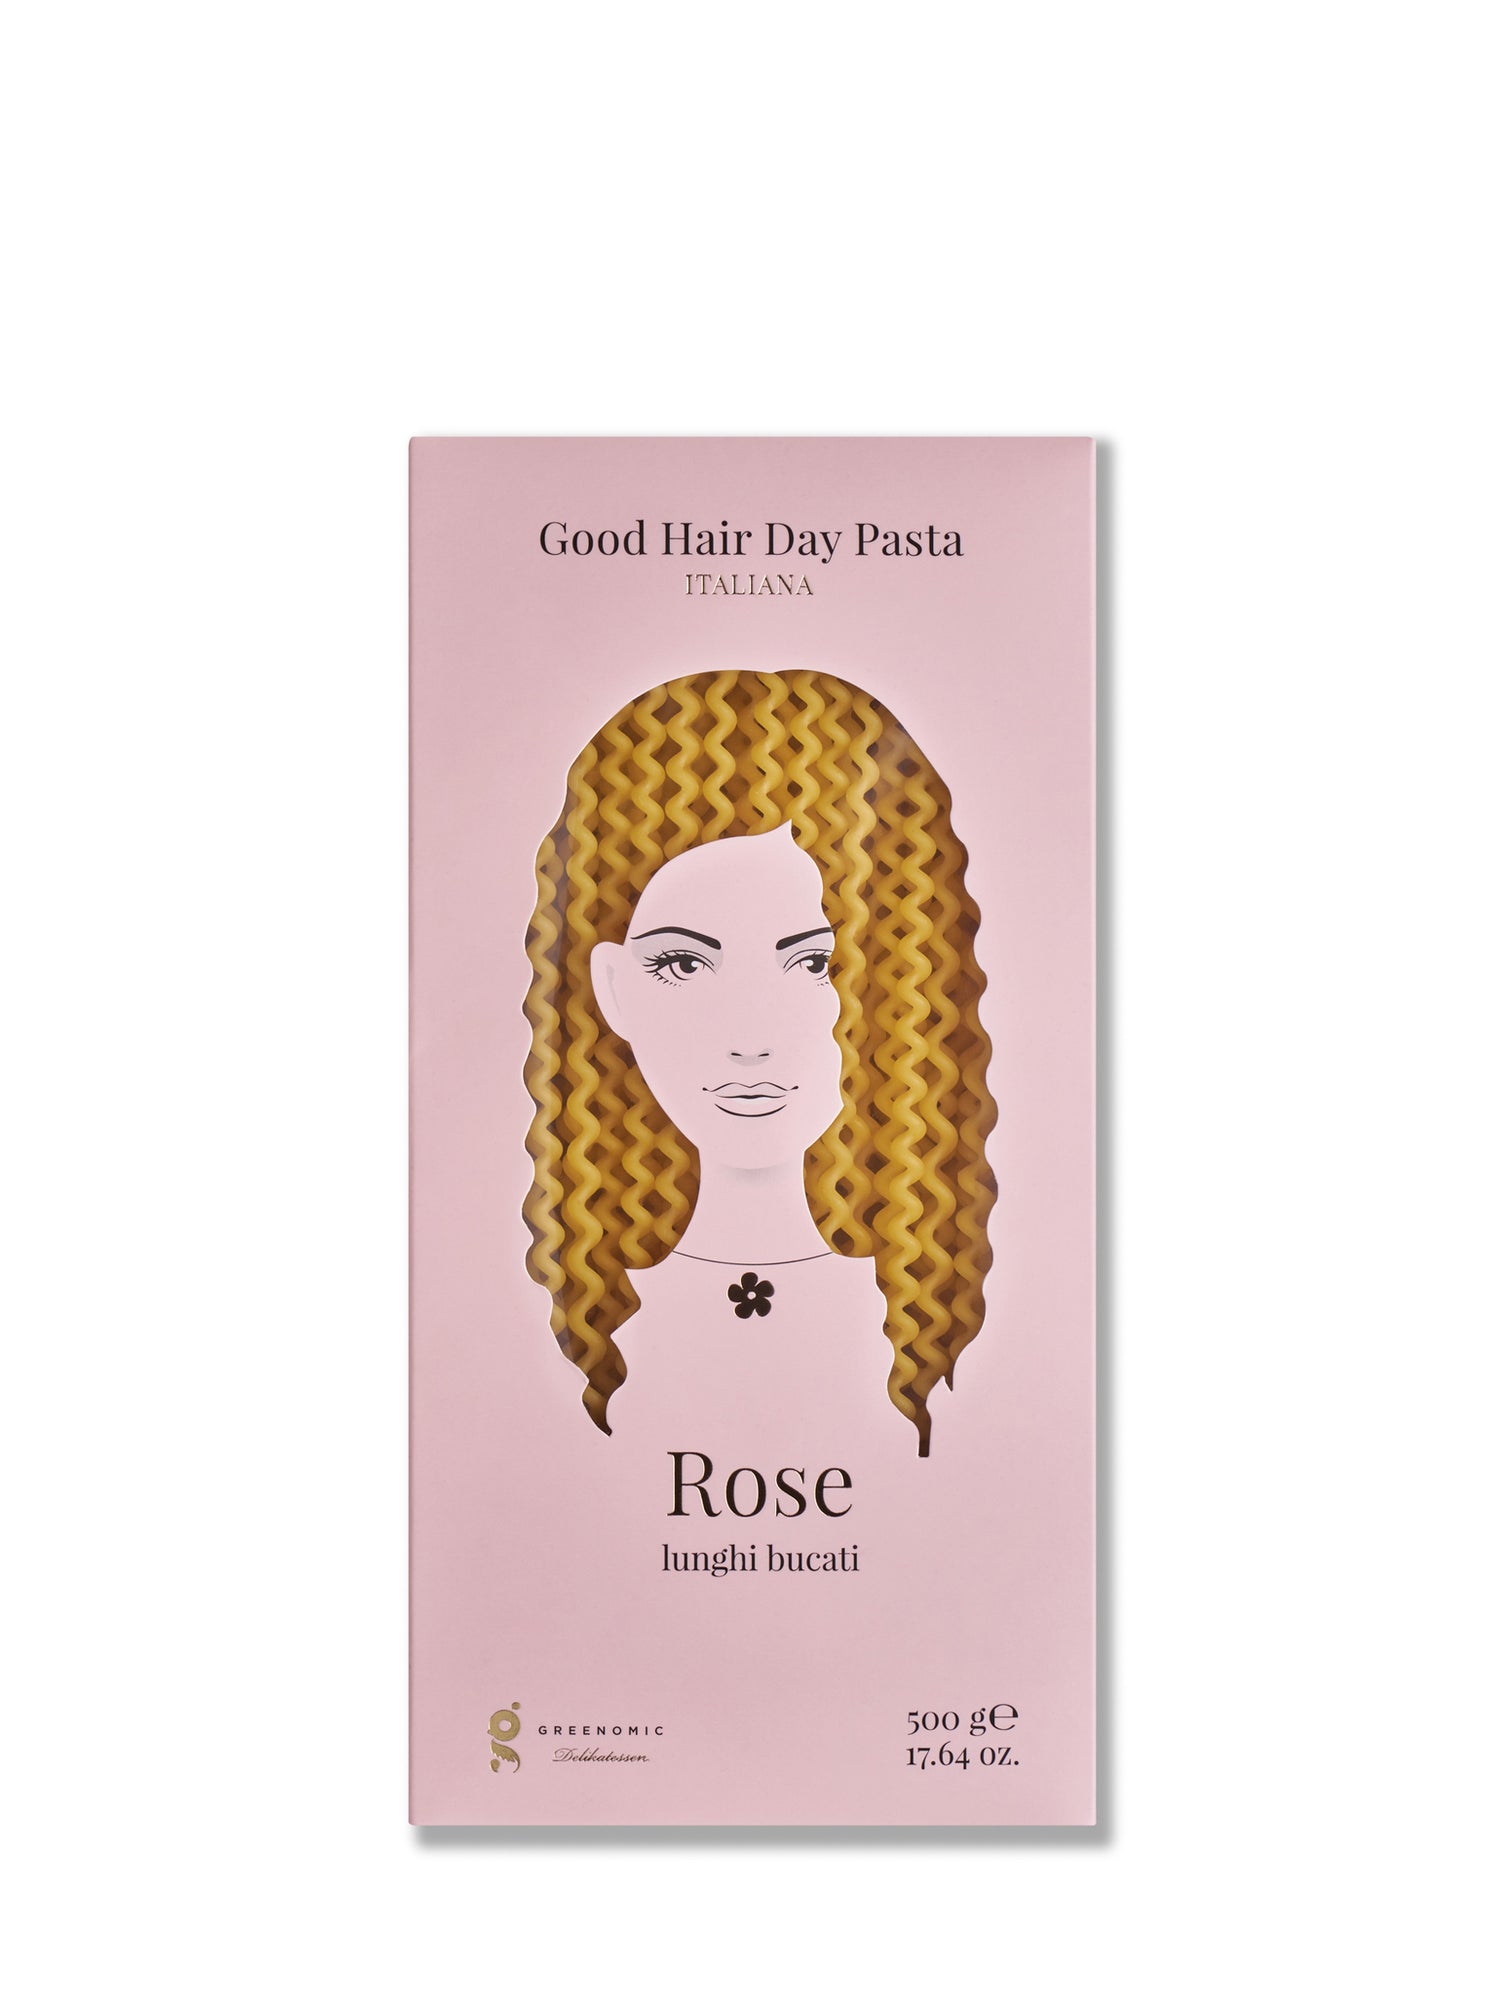 Good Hair Day Pasta Rose lunghi bucati